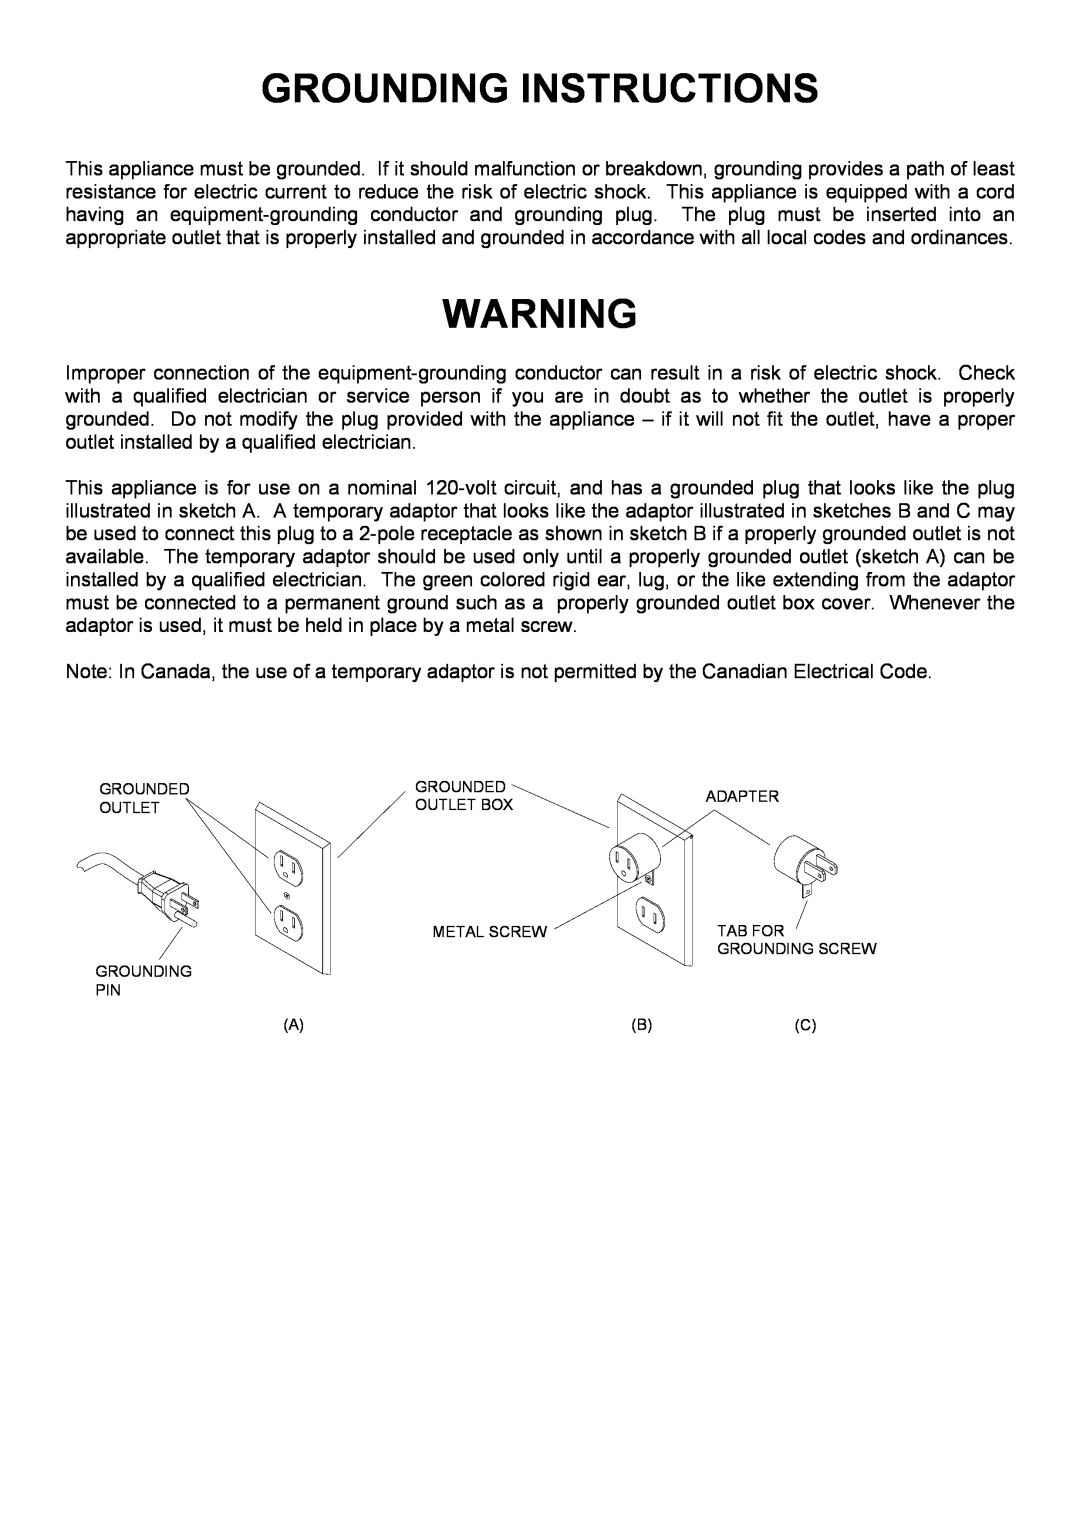 Windsor SRXP12 manual Grounding Instructions, Grounded Outlet Grounding Pin A, Grounded Outlet Box Metal Screw 